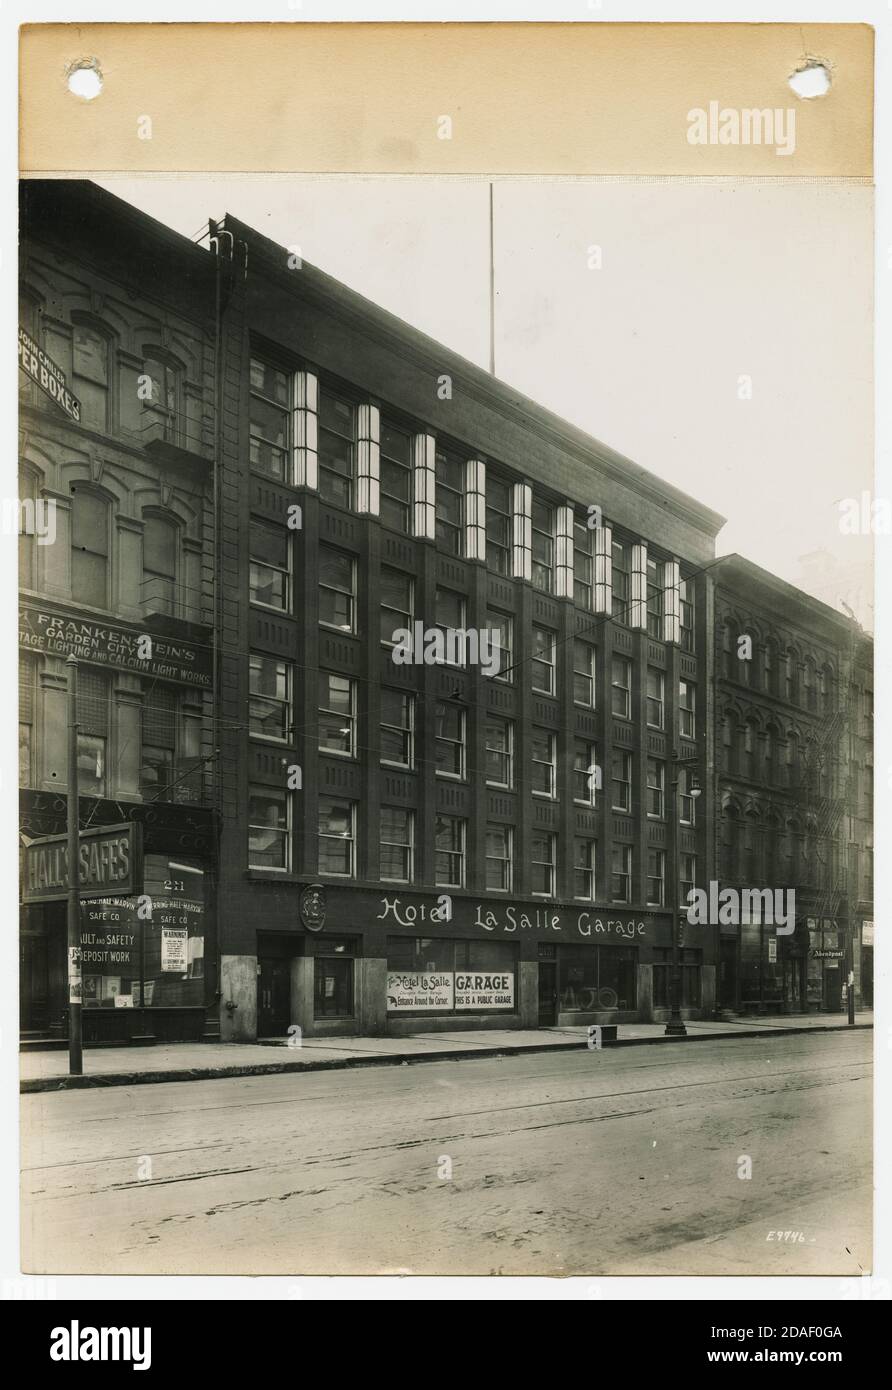 Exterior view of Hotel LaSalle Garage, located at 215 West Washington Street, Chicago, Illinois, circa 1918. Stock Photo